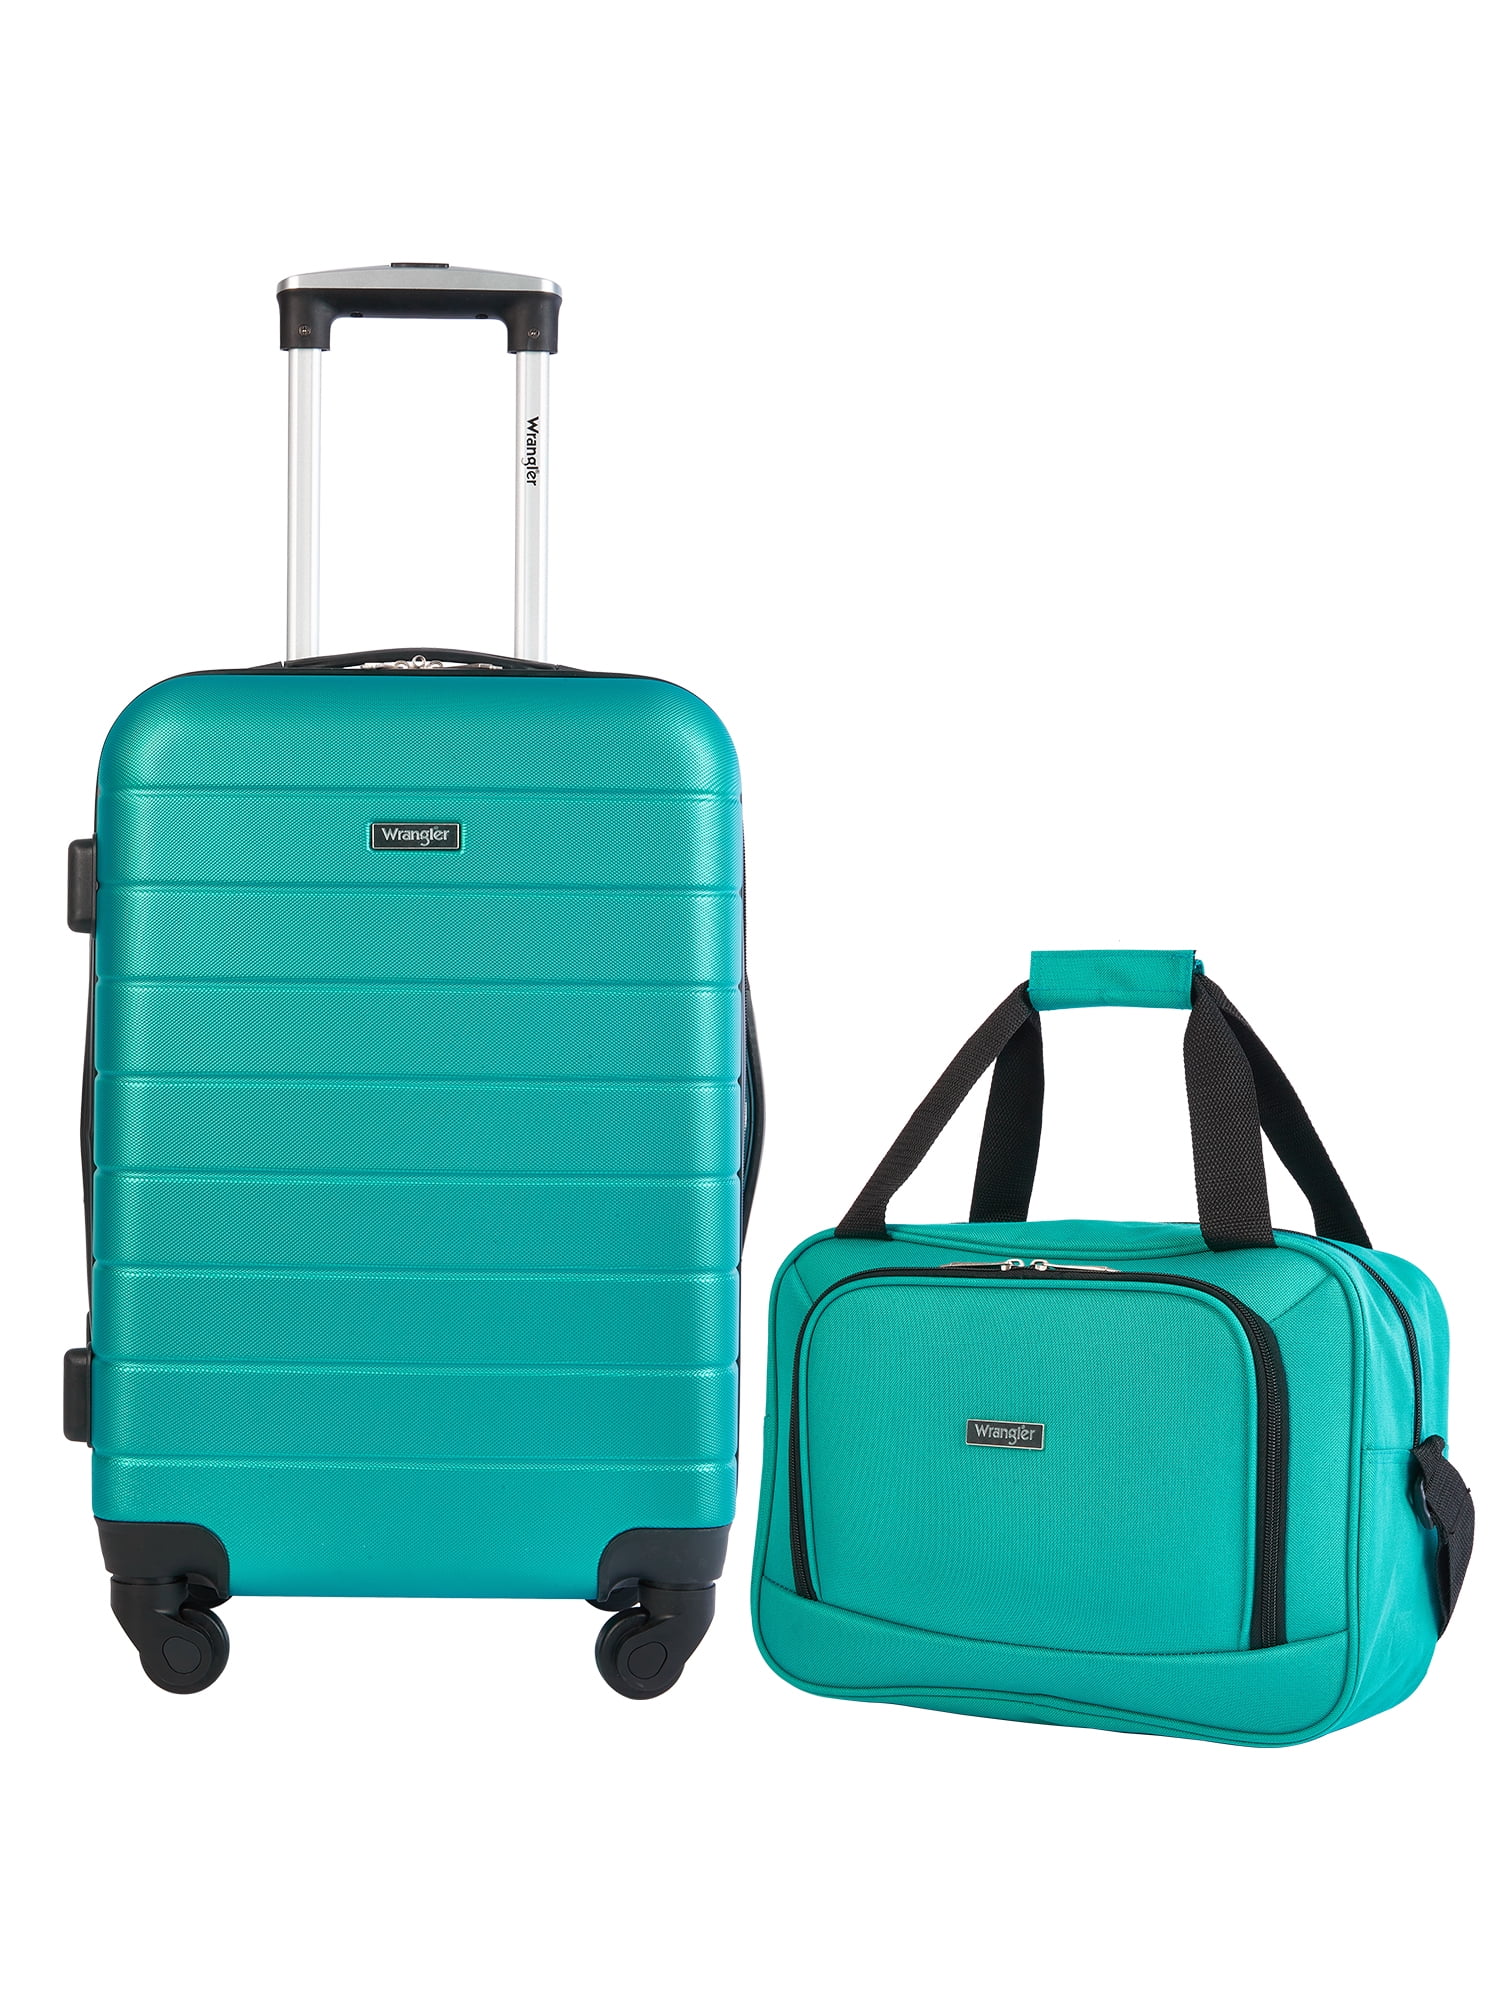 Wrangler 2pc Expandable Hardisde Carry-on Luggage Set, Teal 